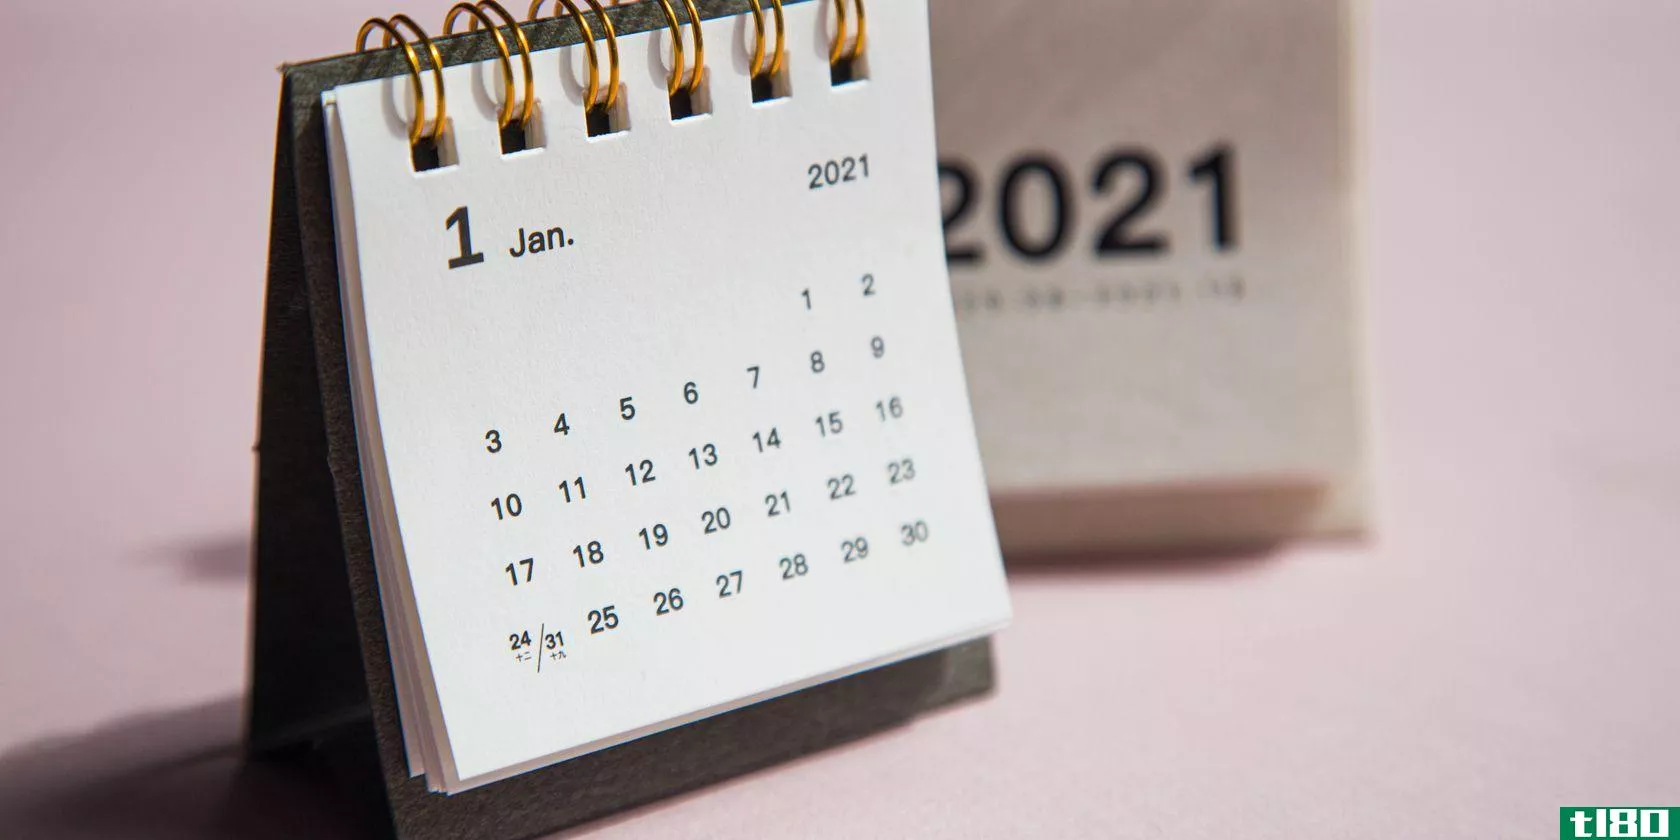 A calendar showing January 2021